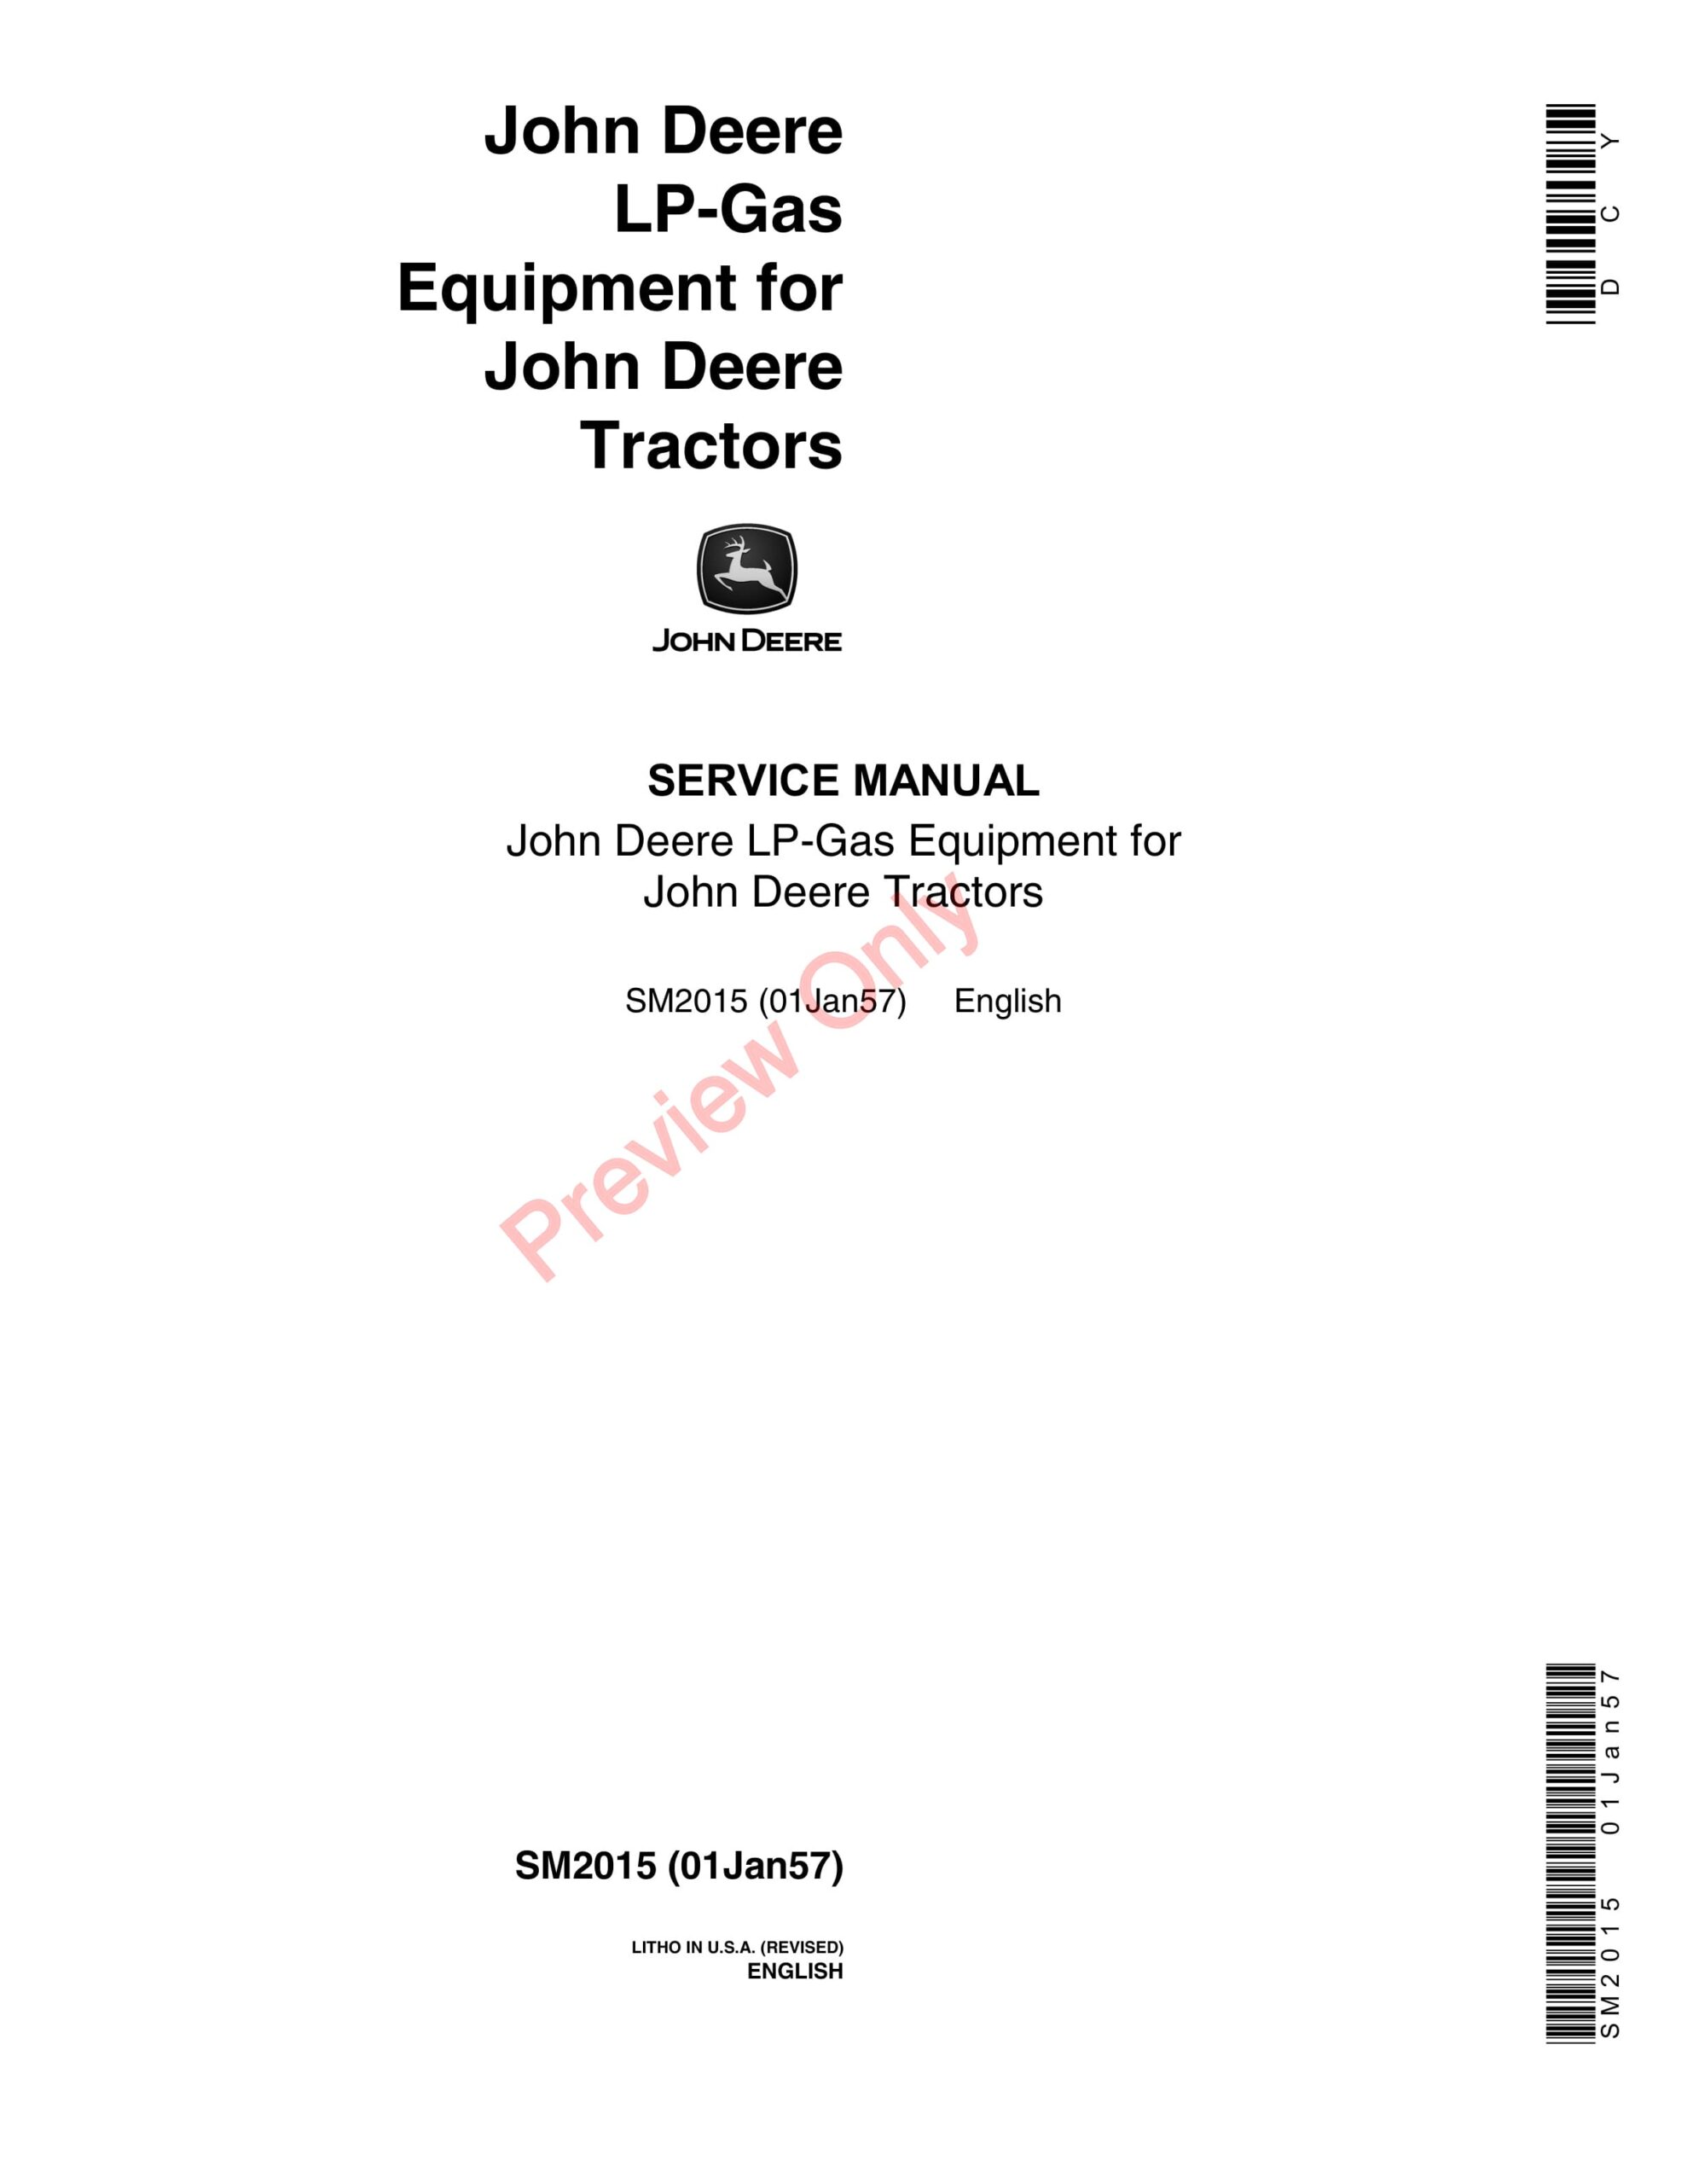 John Deere LP Gas Equipment for Tractors Service Manual SM2015 01JAN57-1